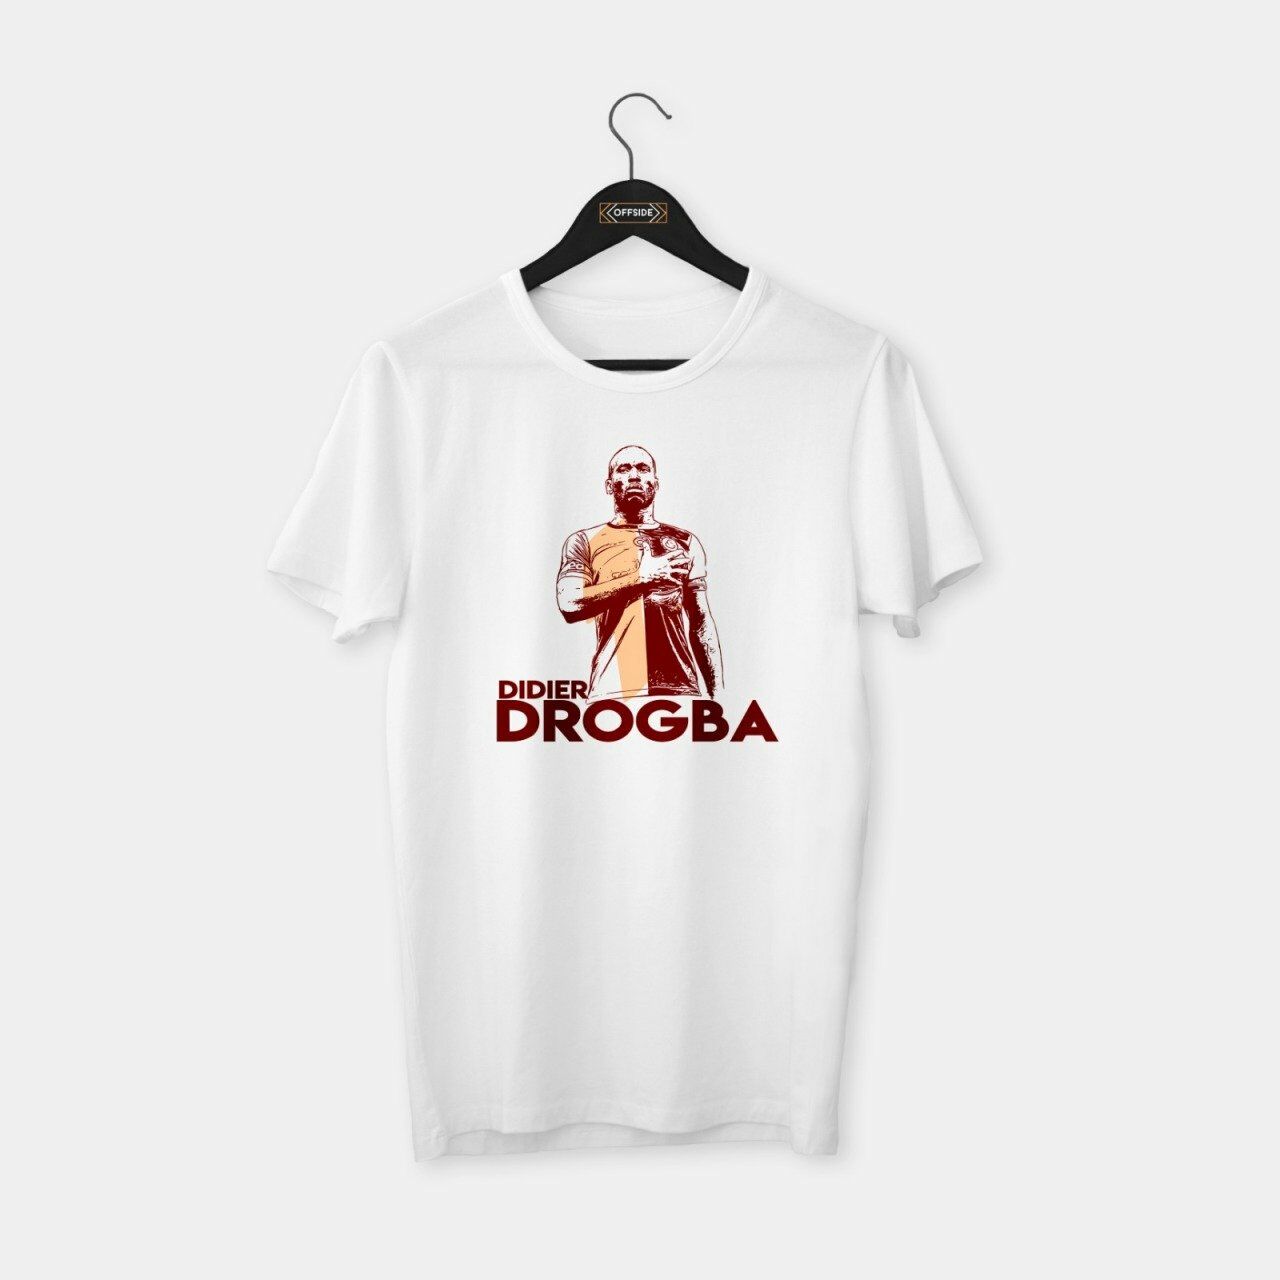 Didier Drogba T-shirt